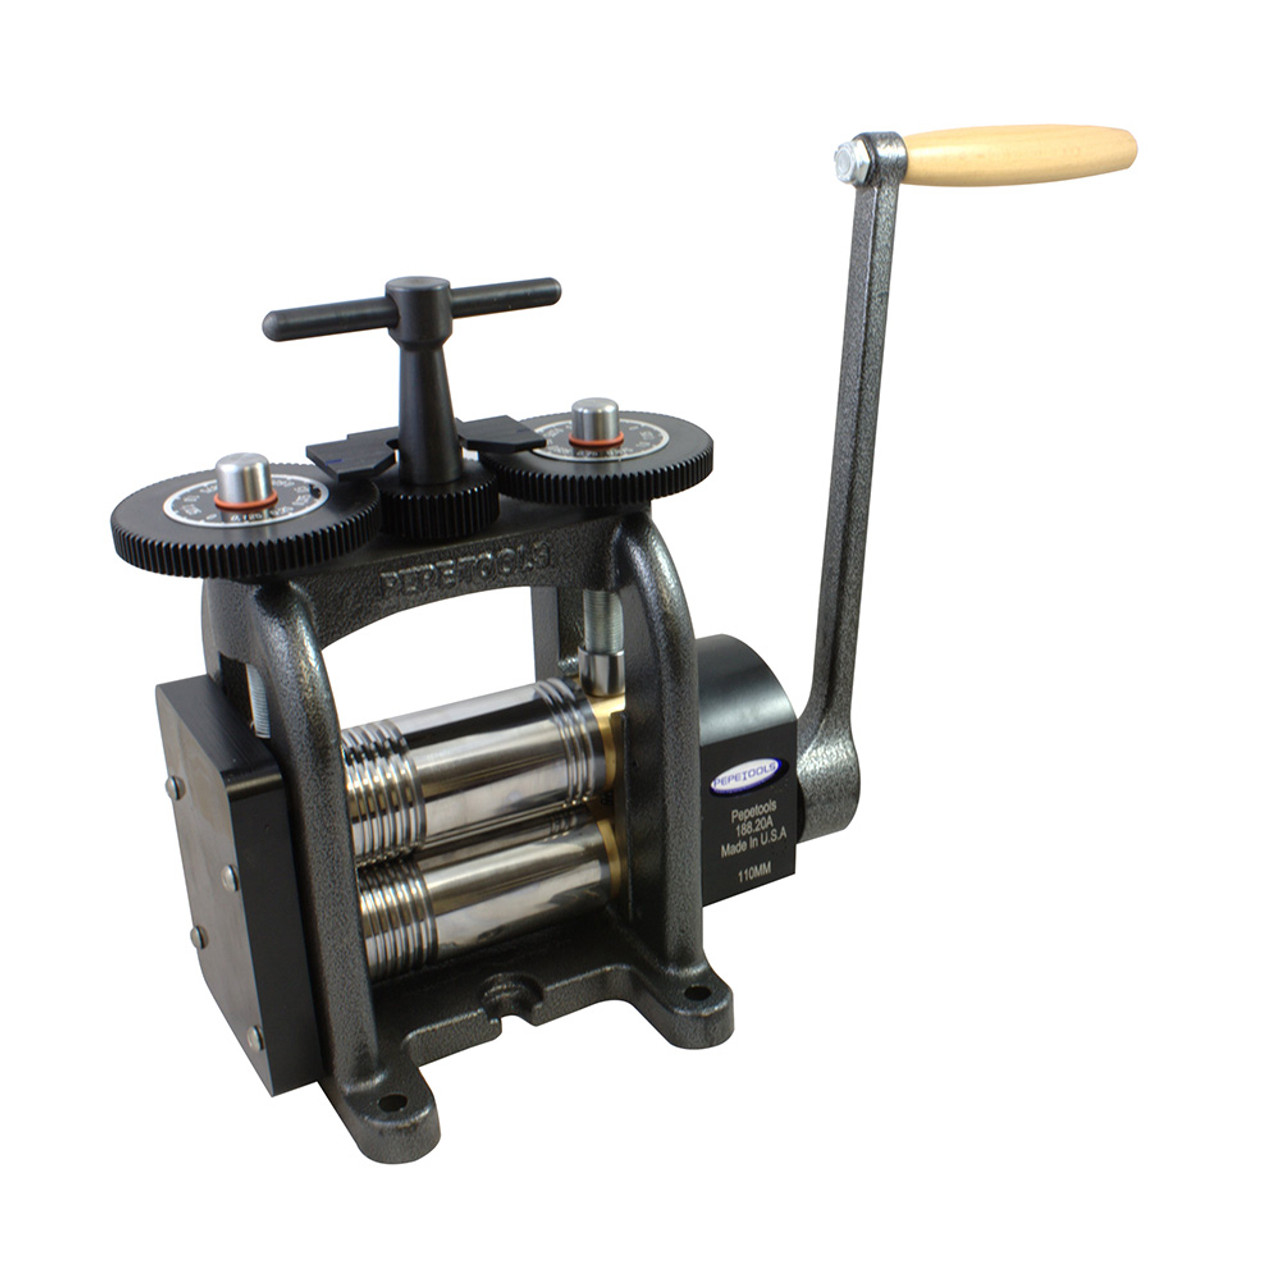 PEPETOOLS® 110mm Combo Ultra Rolling Mill